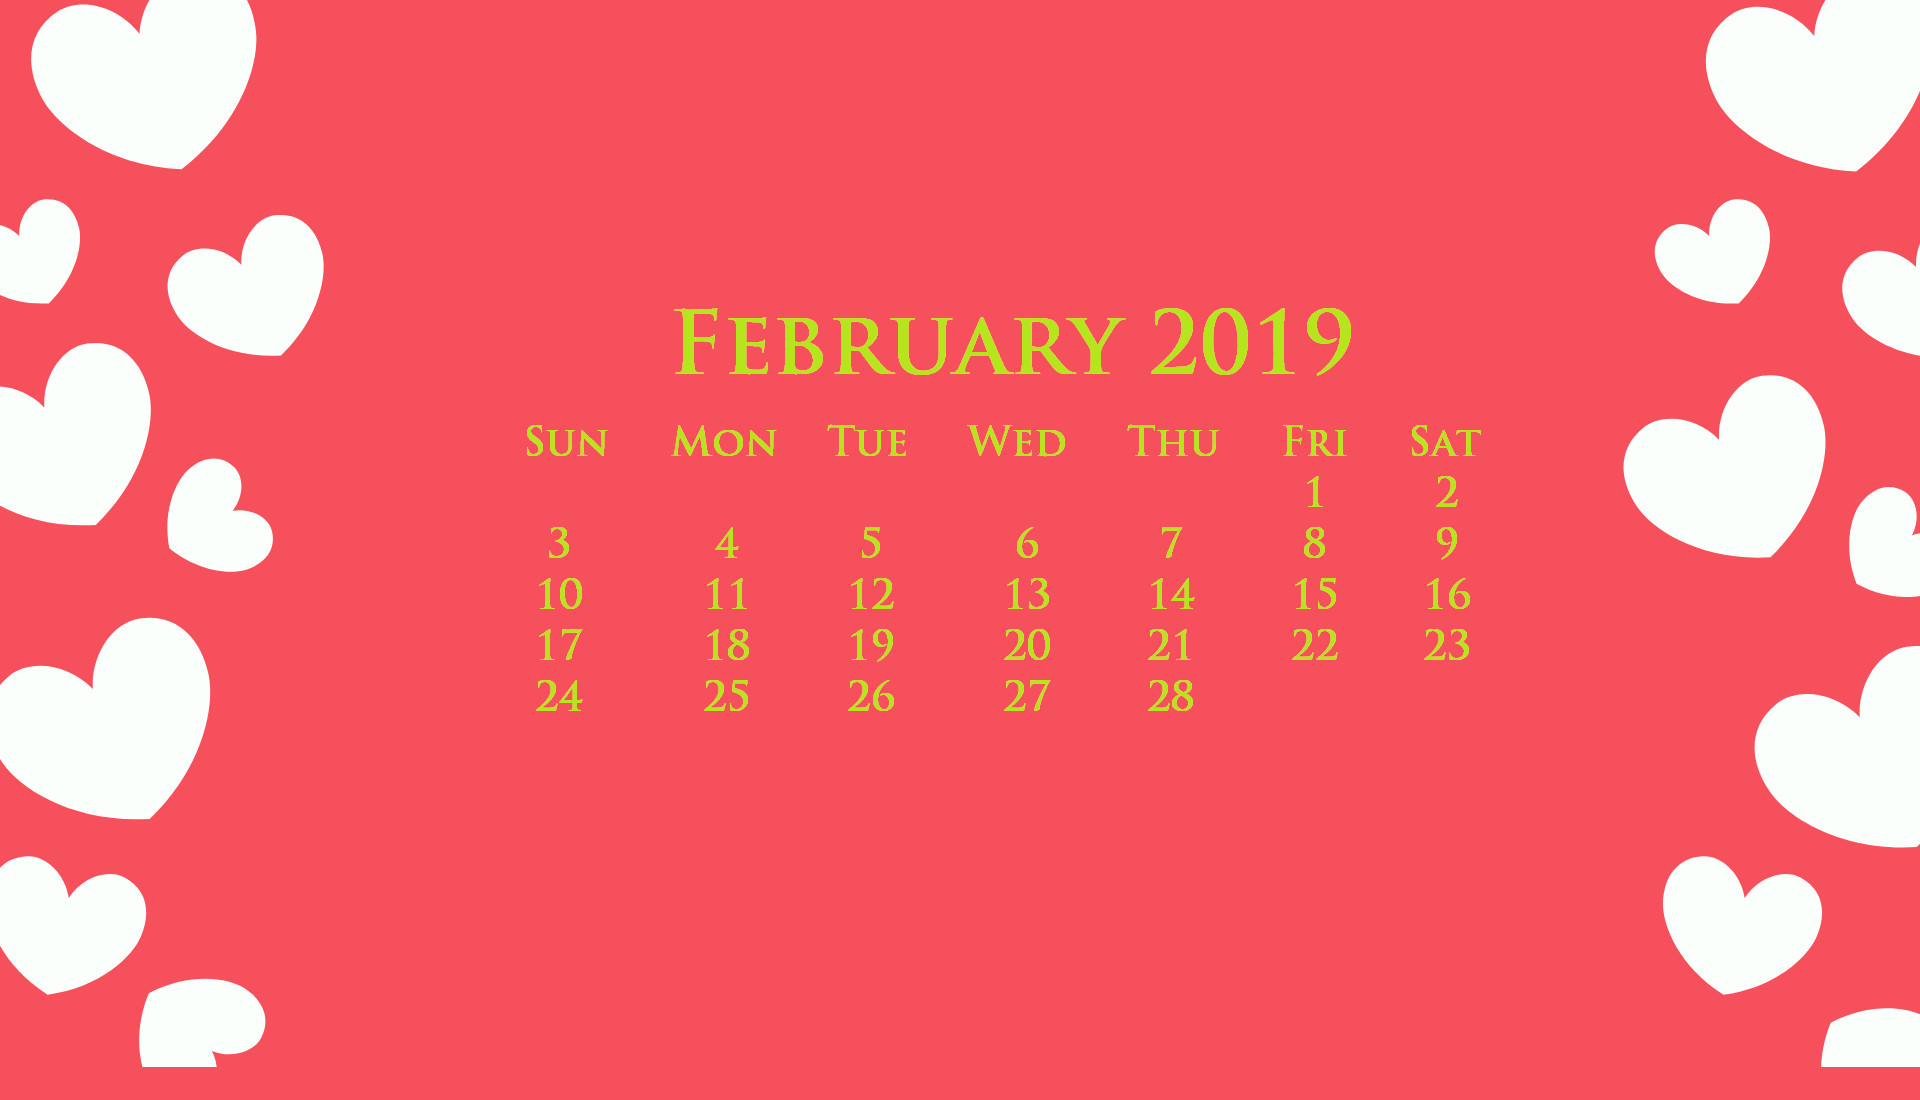 1920x1100 Desktop February 2019 Calendar Wallpaper #february #2019february  #februarycalendar2019 #desktopcaledar